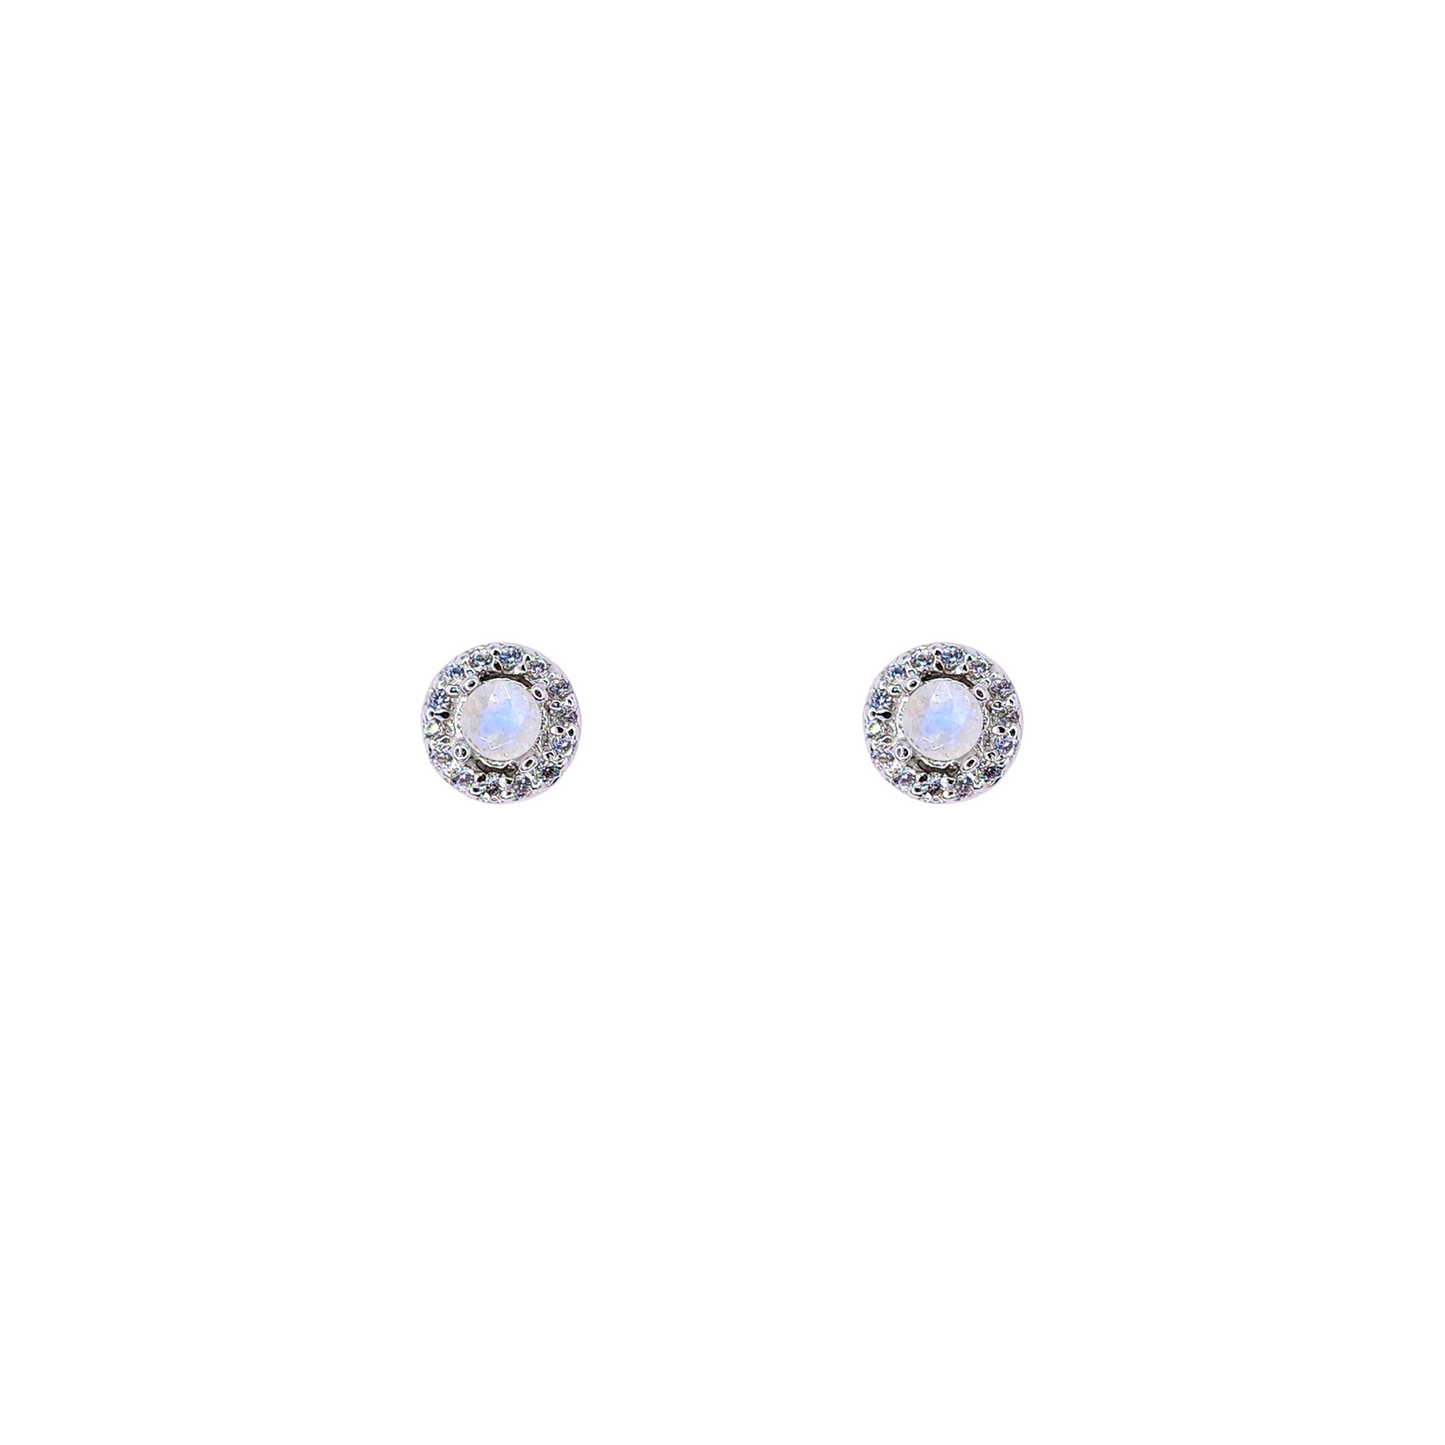 Round moon stone earrings